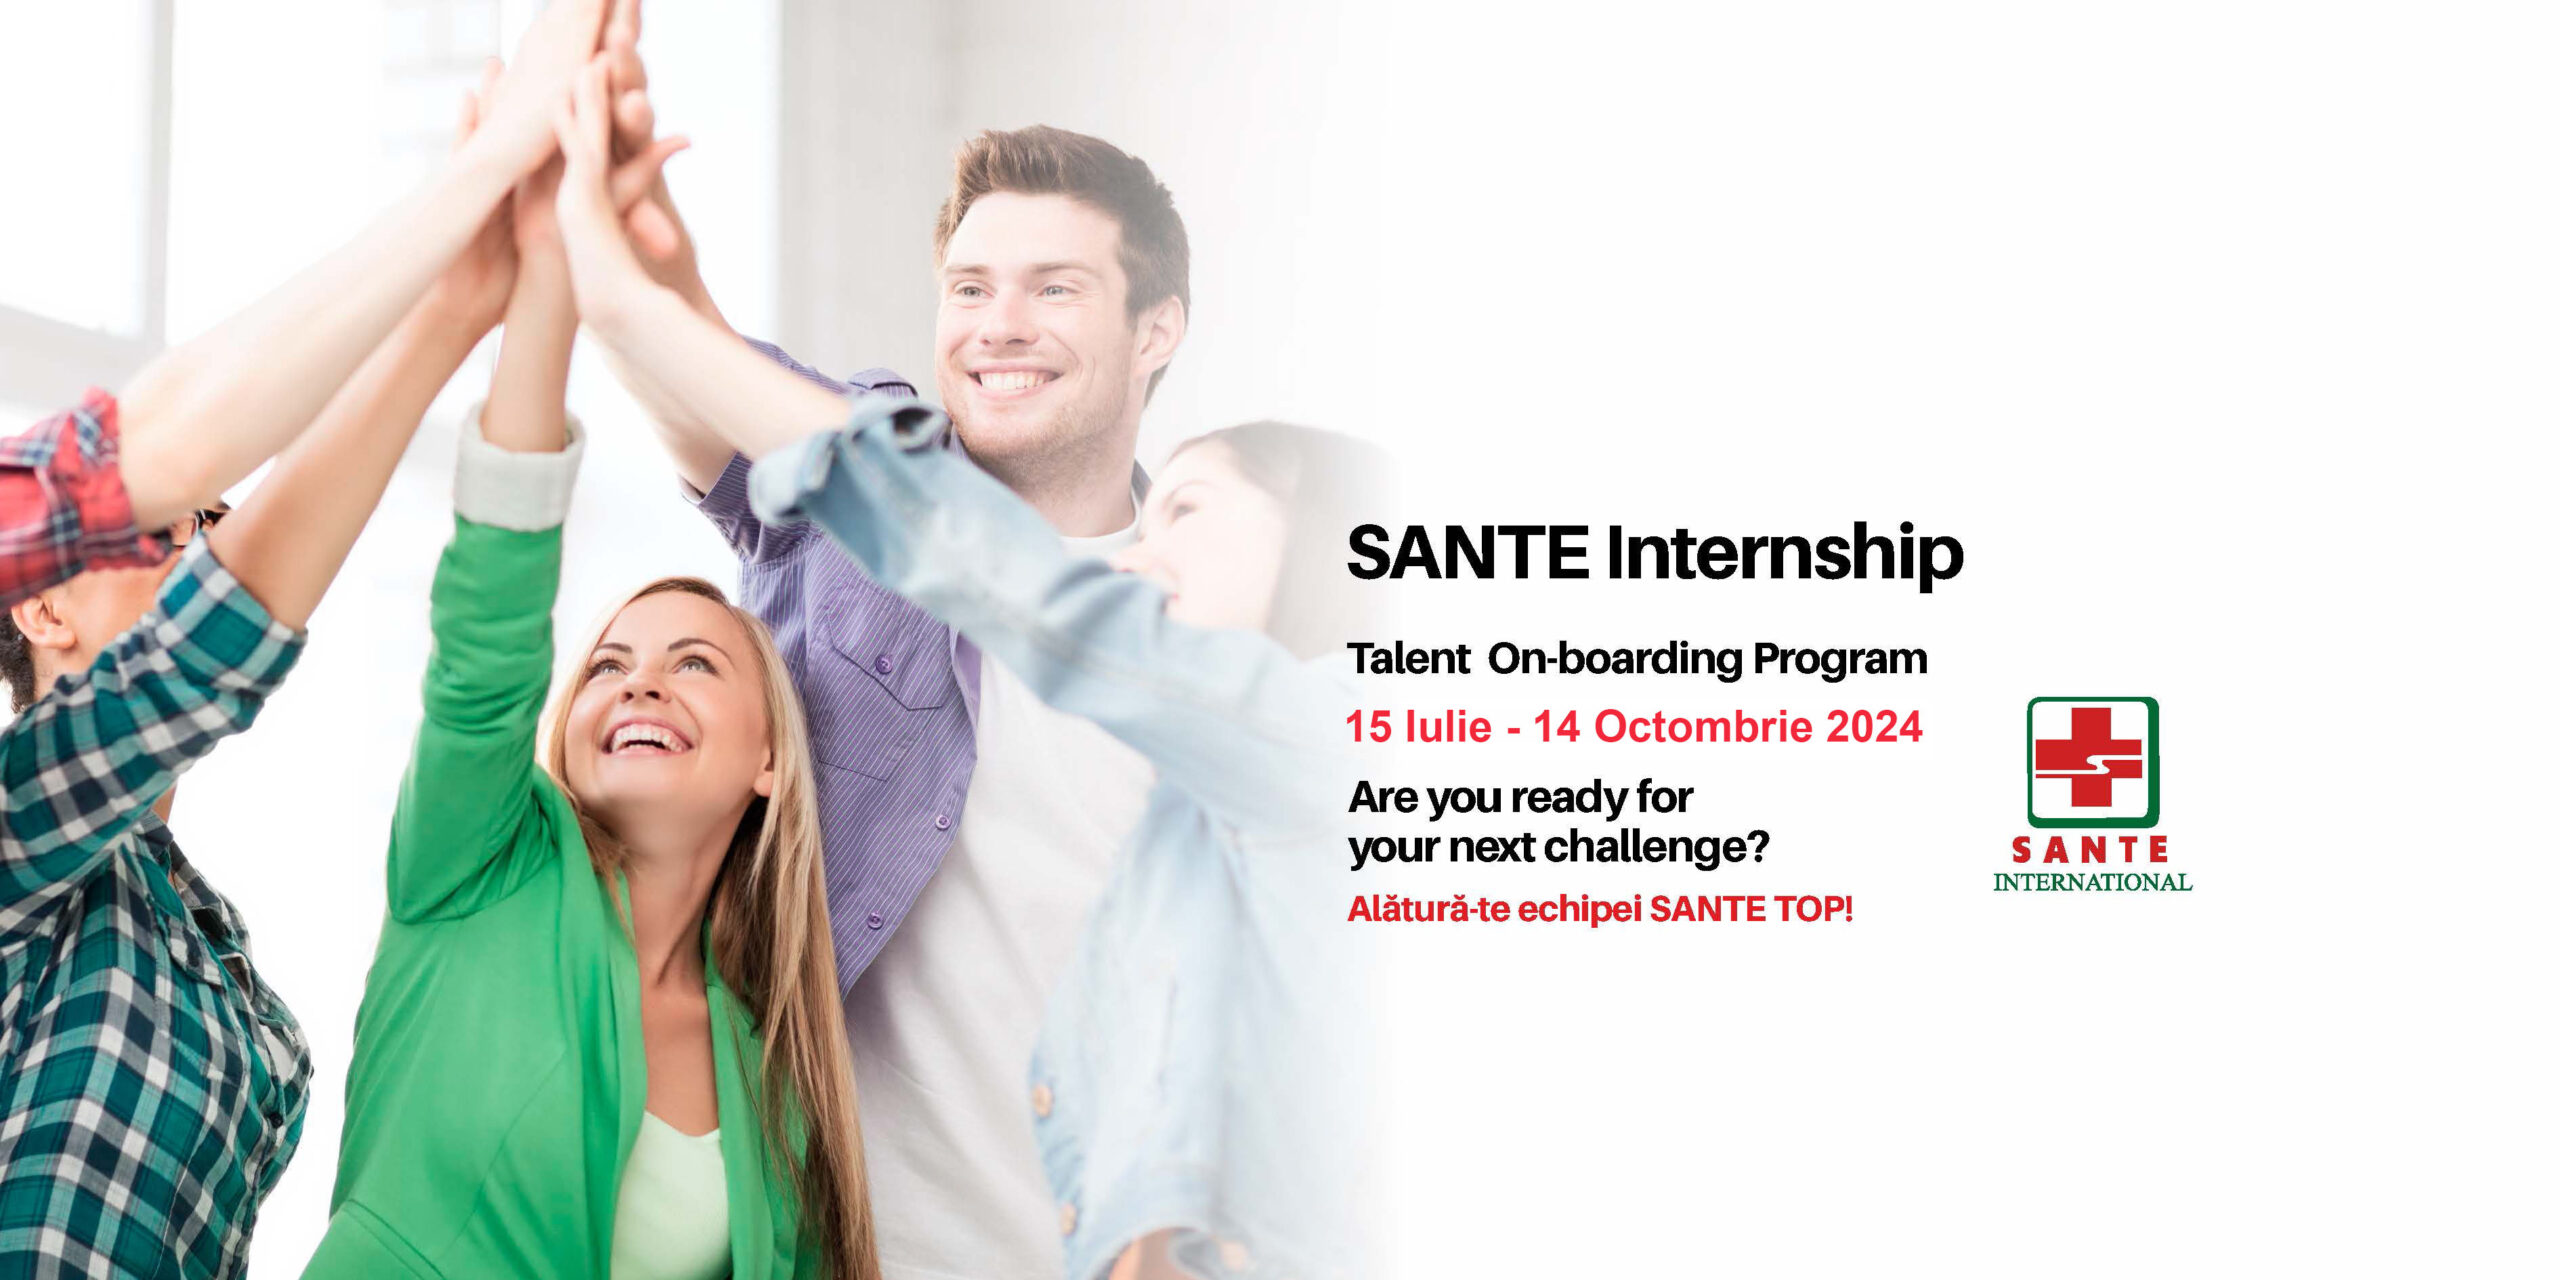 Sante International Internship 2024